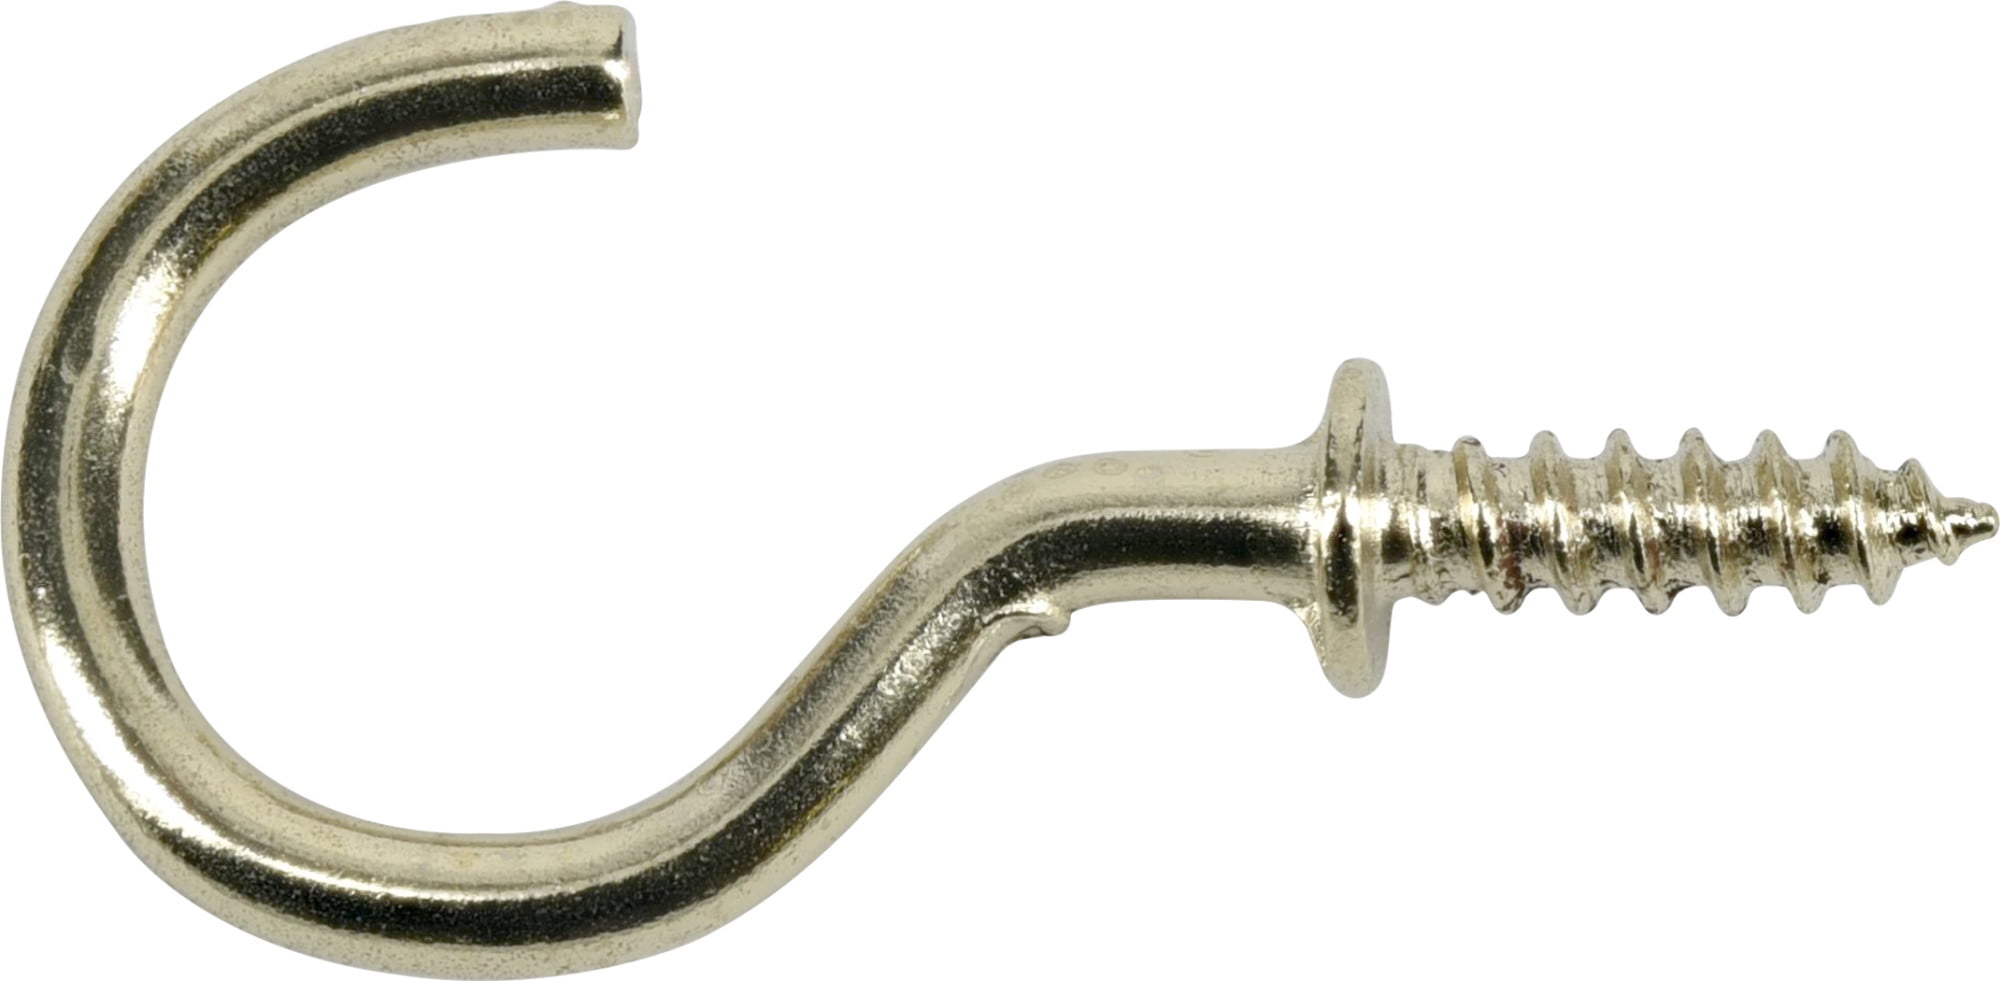 RELBRO 1-1/4 inch Screw Hooks, BronzeÂ Cup Hooks Screw